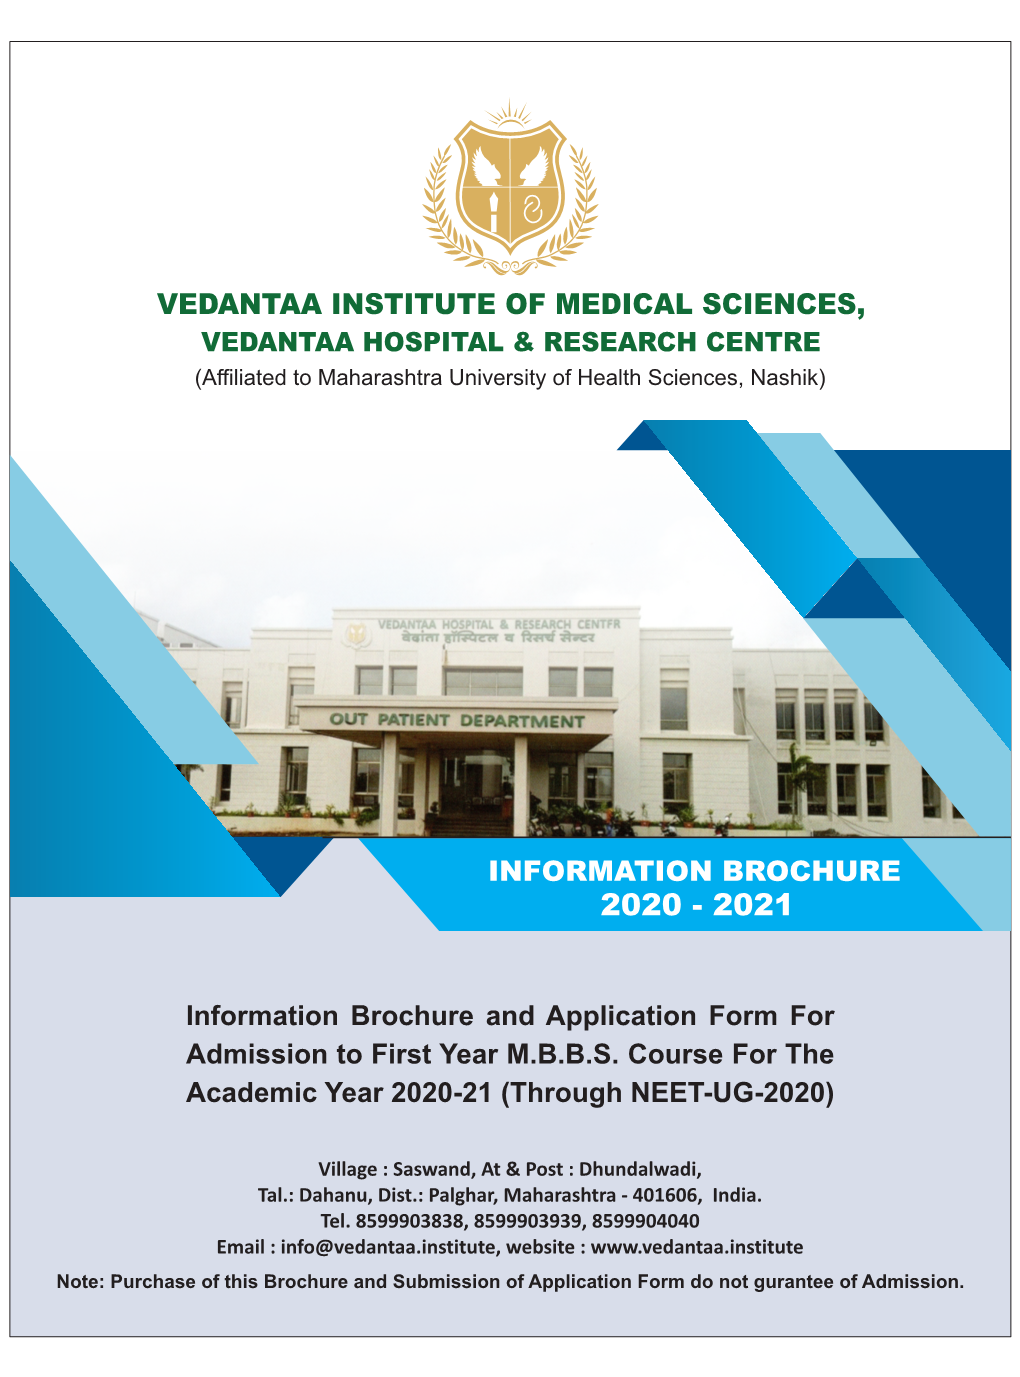 Vedanta Medical College Prospetus 2020.Cdr